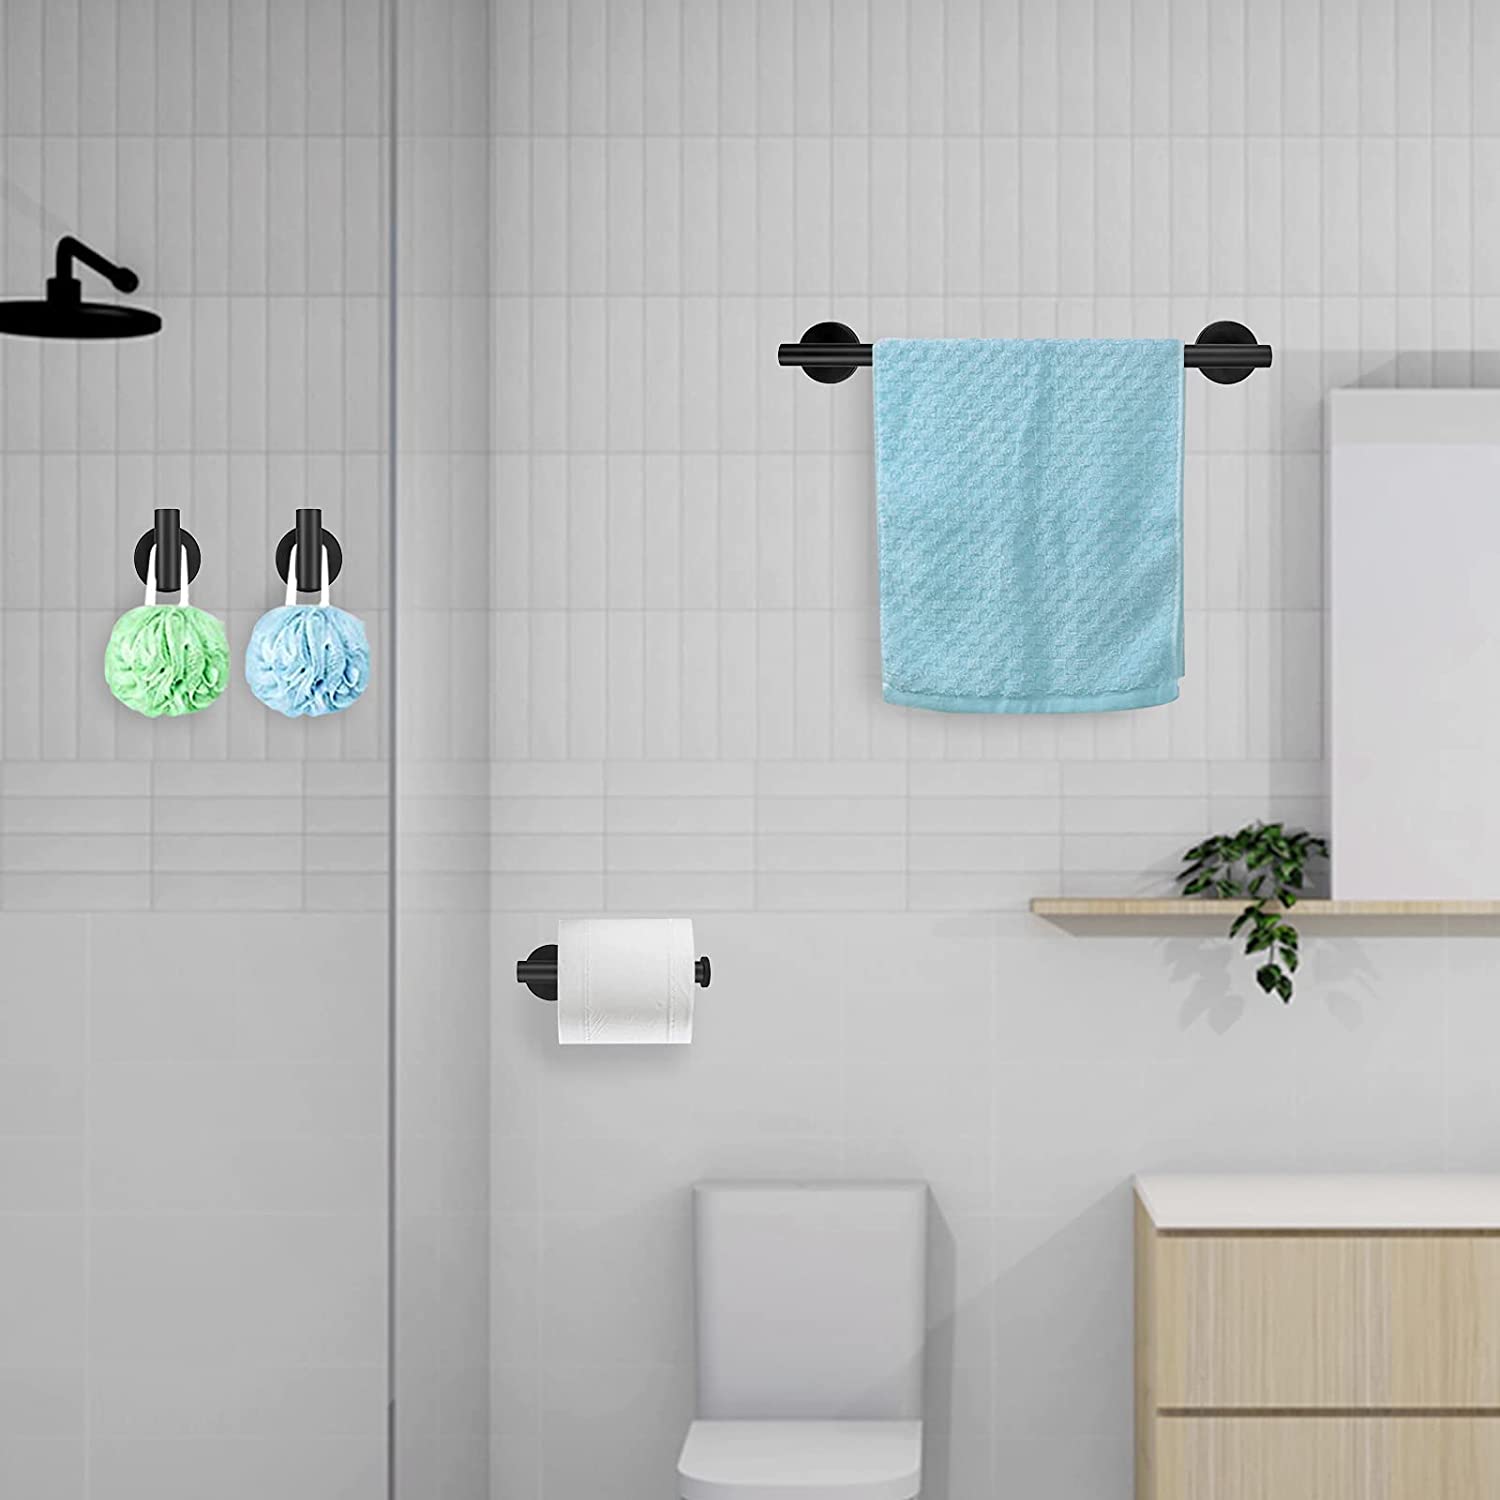 HOMGEN Popular 4pcs Modern Bathroom Accessories Set